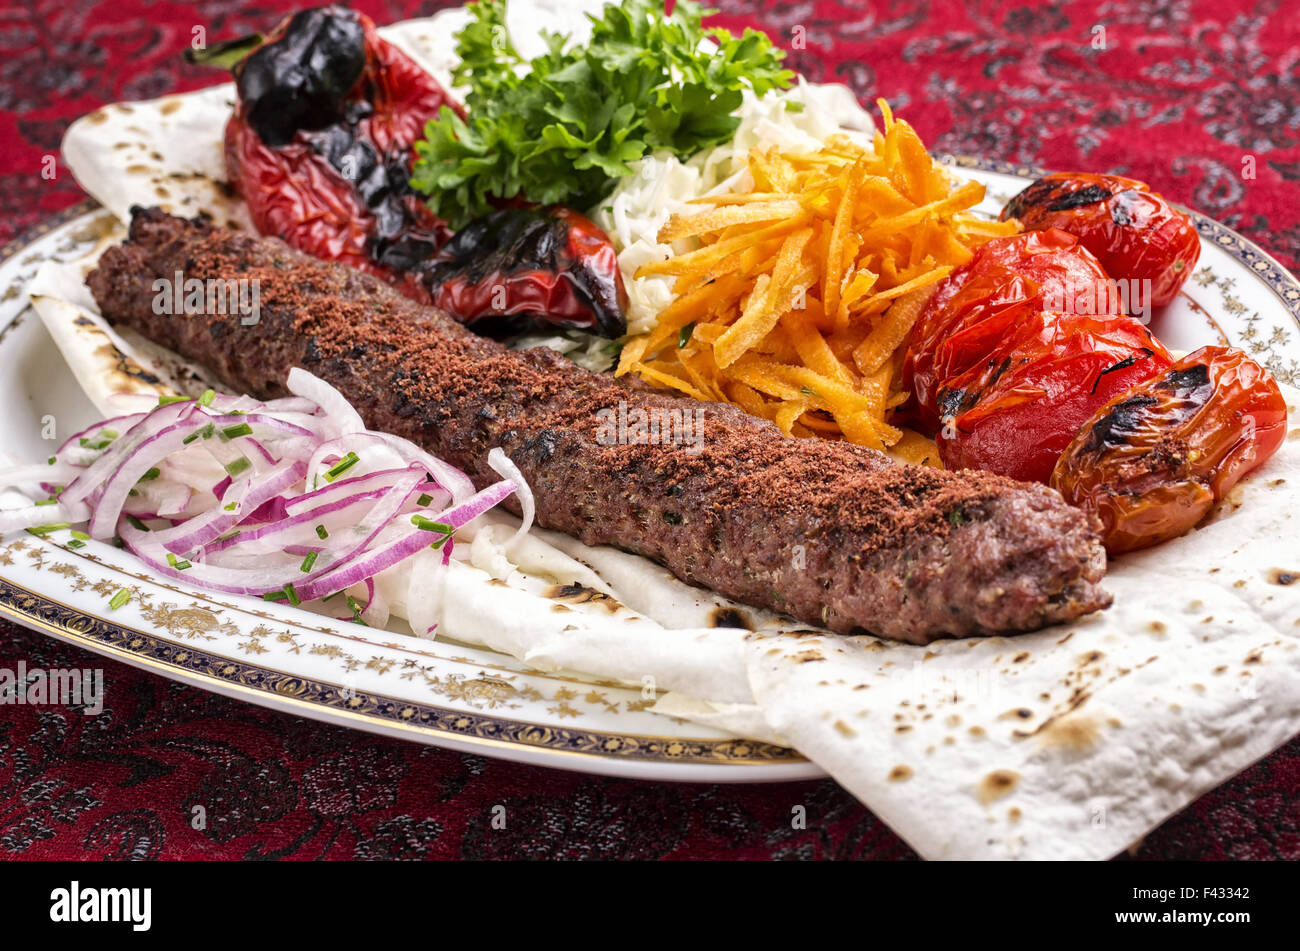 adana kebab with salad and flat bread Stock Photo